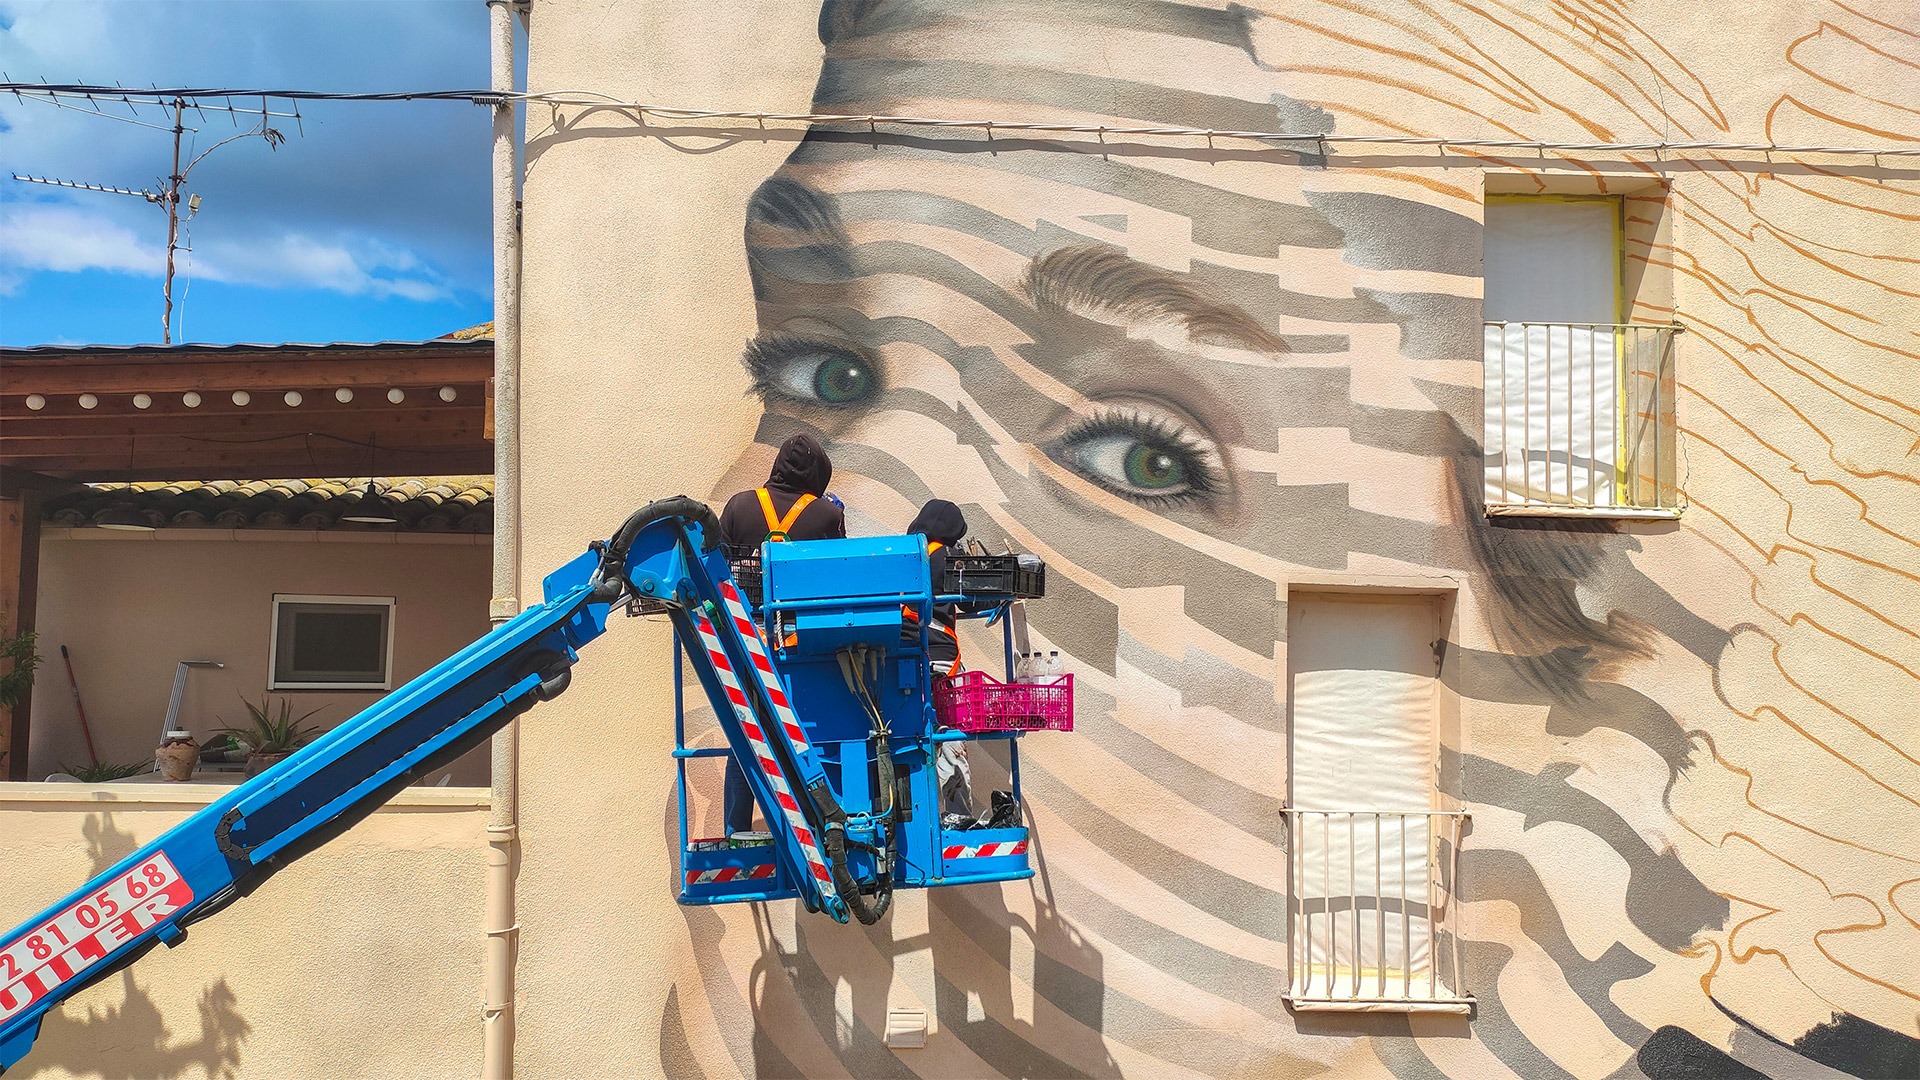 Jorge Rodriguez-Gerada大型街头艺术作品